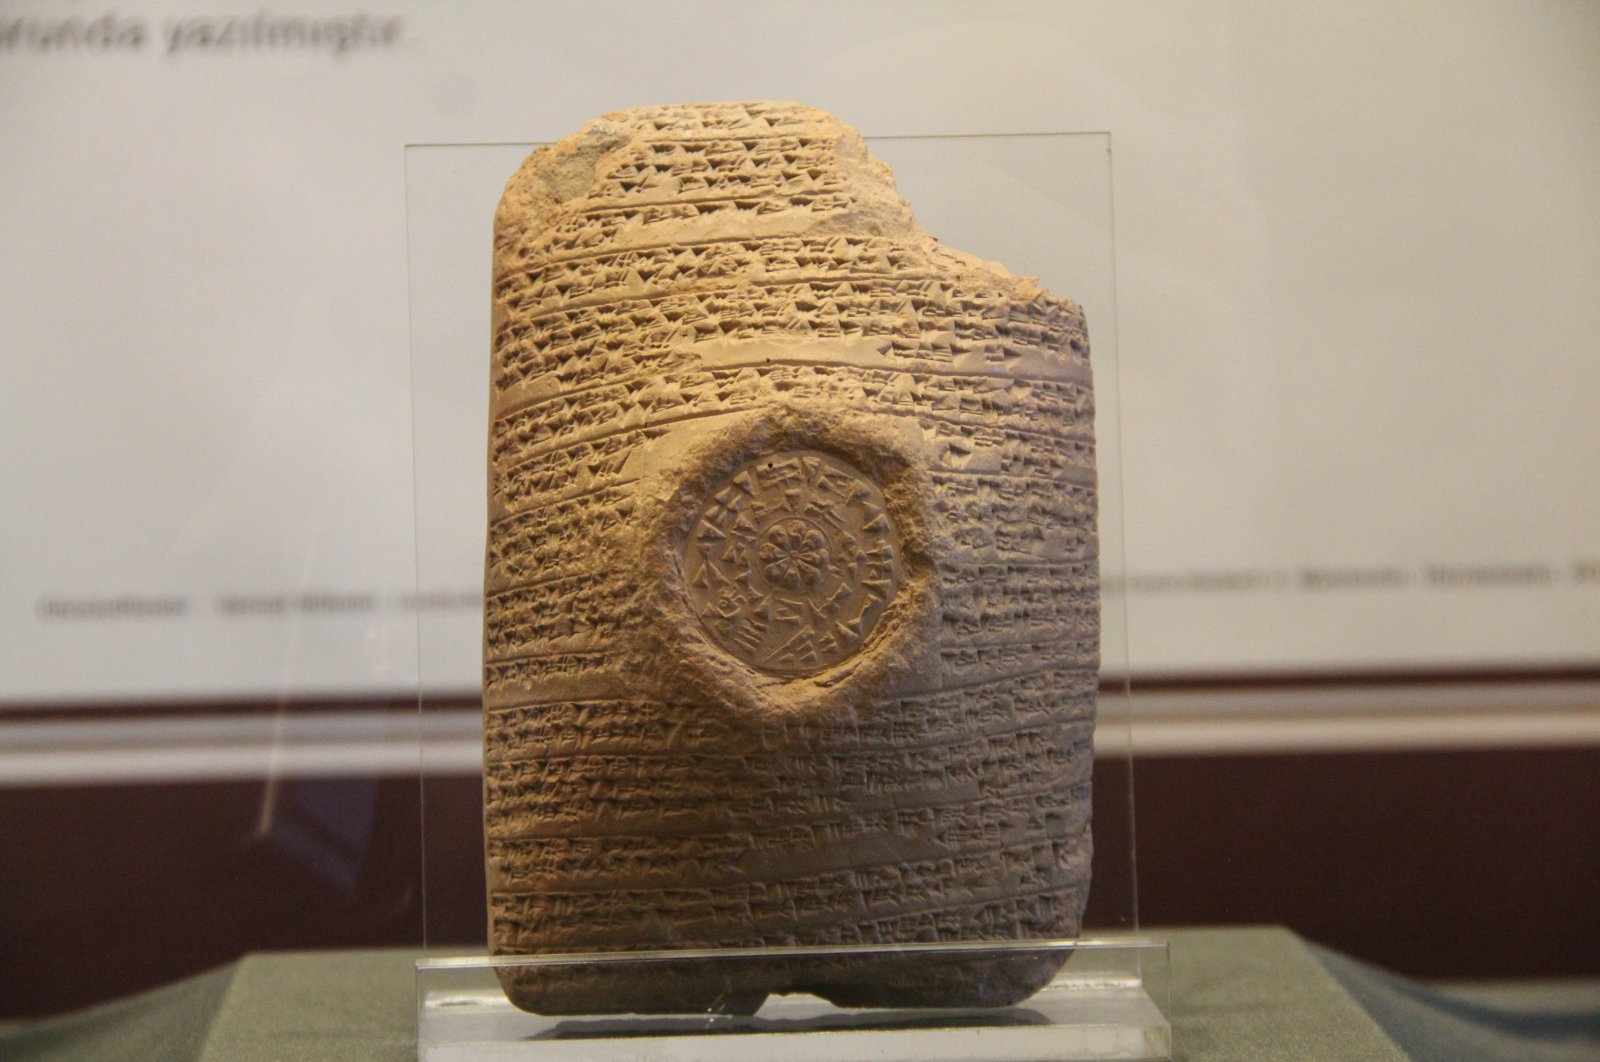 One of the clay tablets displayed in the museum, Çorum, Türkiye, Jan. 4, 2023. (IHA Photo)